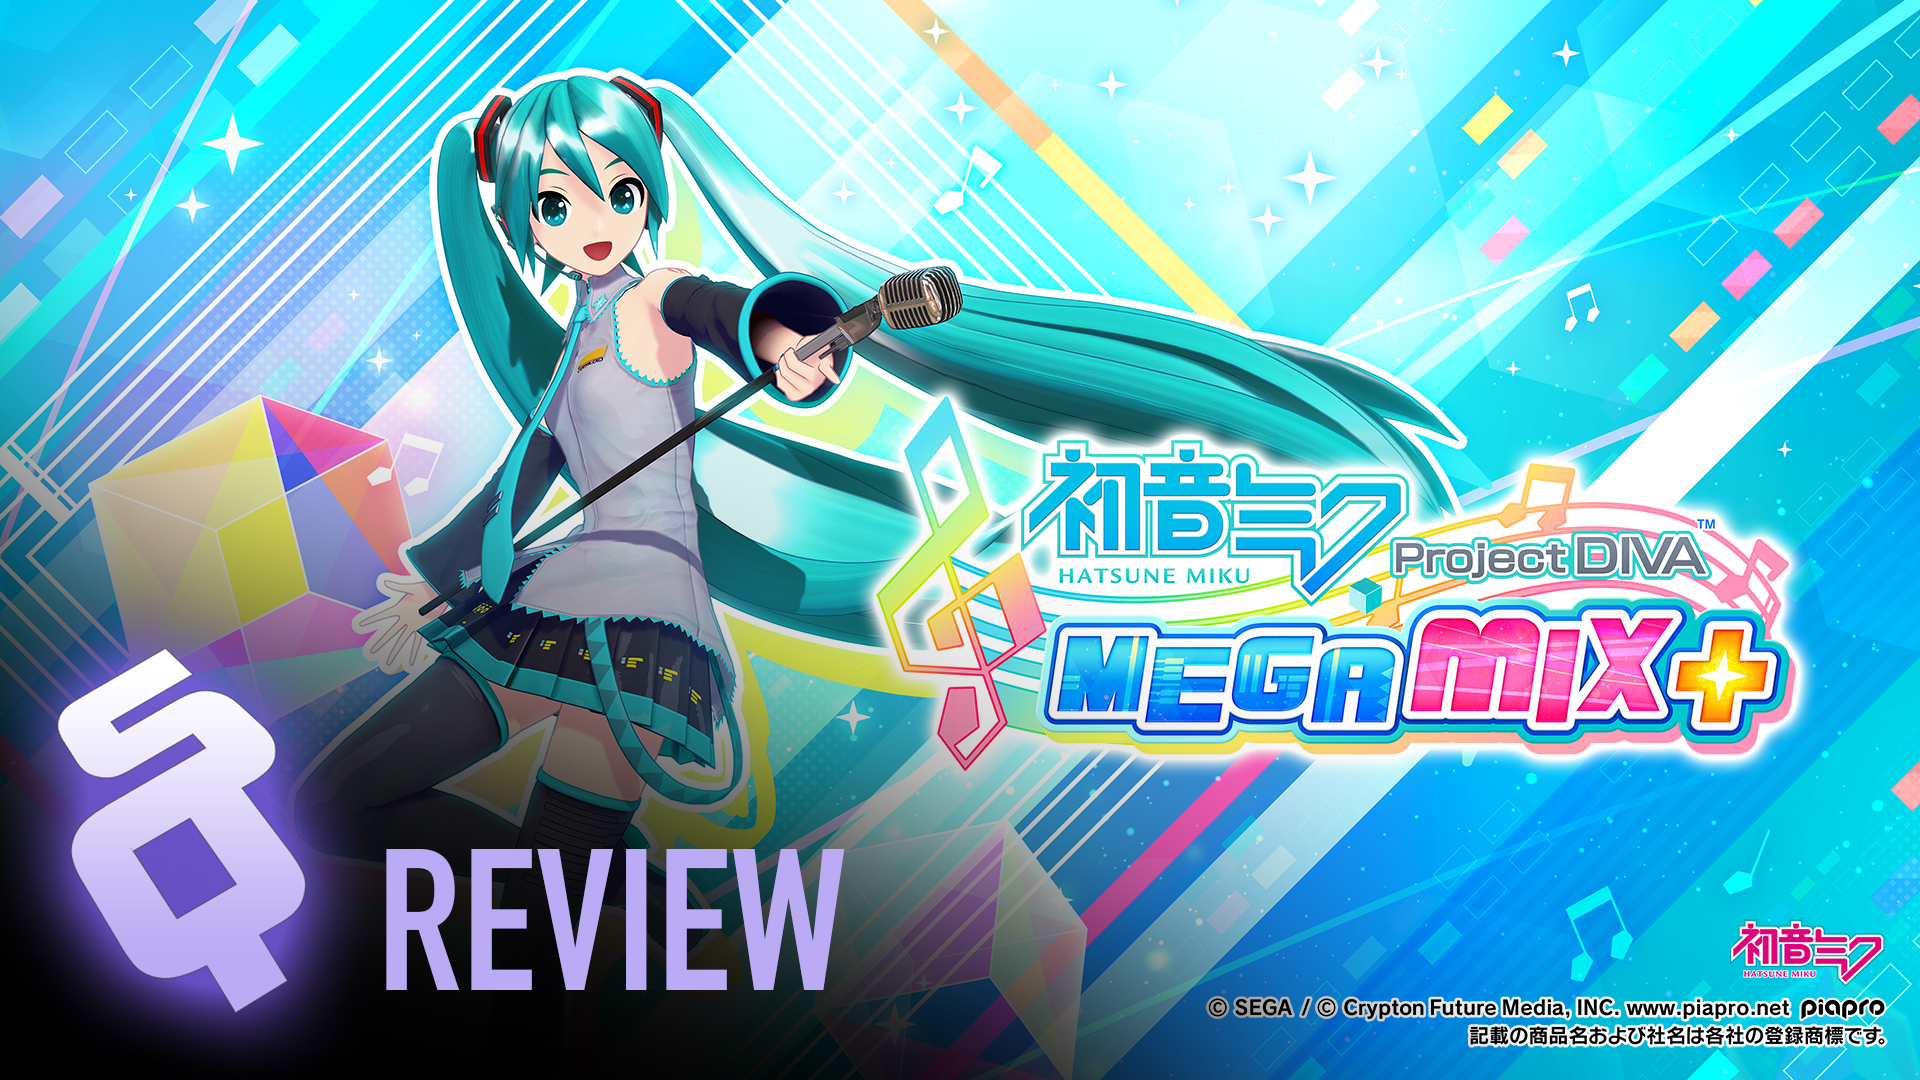 Review: Hatsune Miku: Project DIVA Mega Mix+